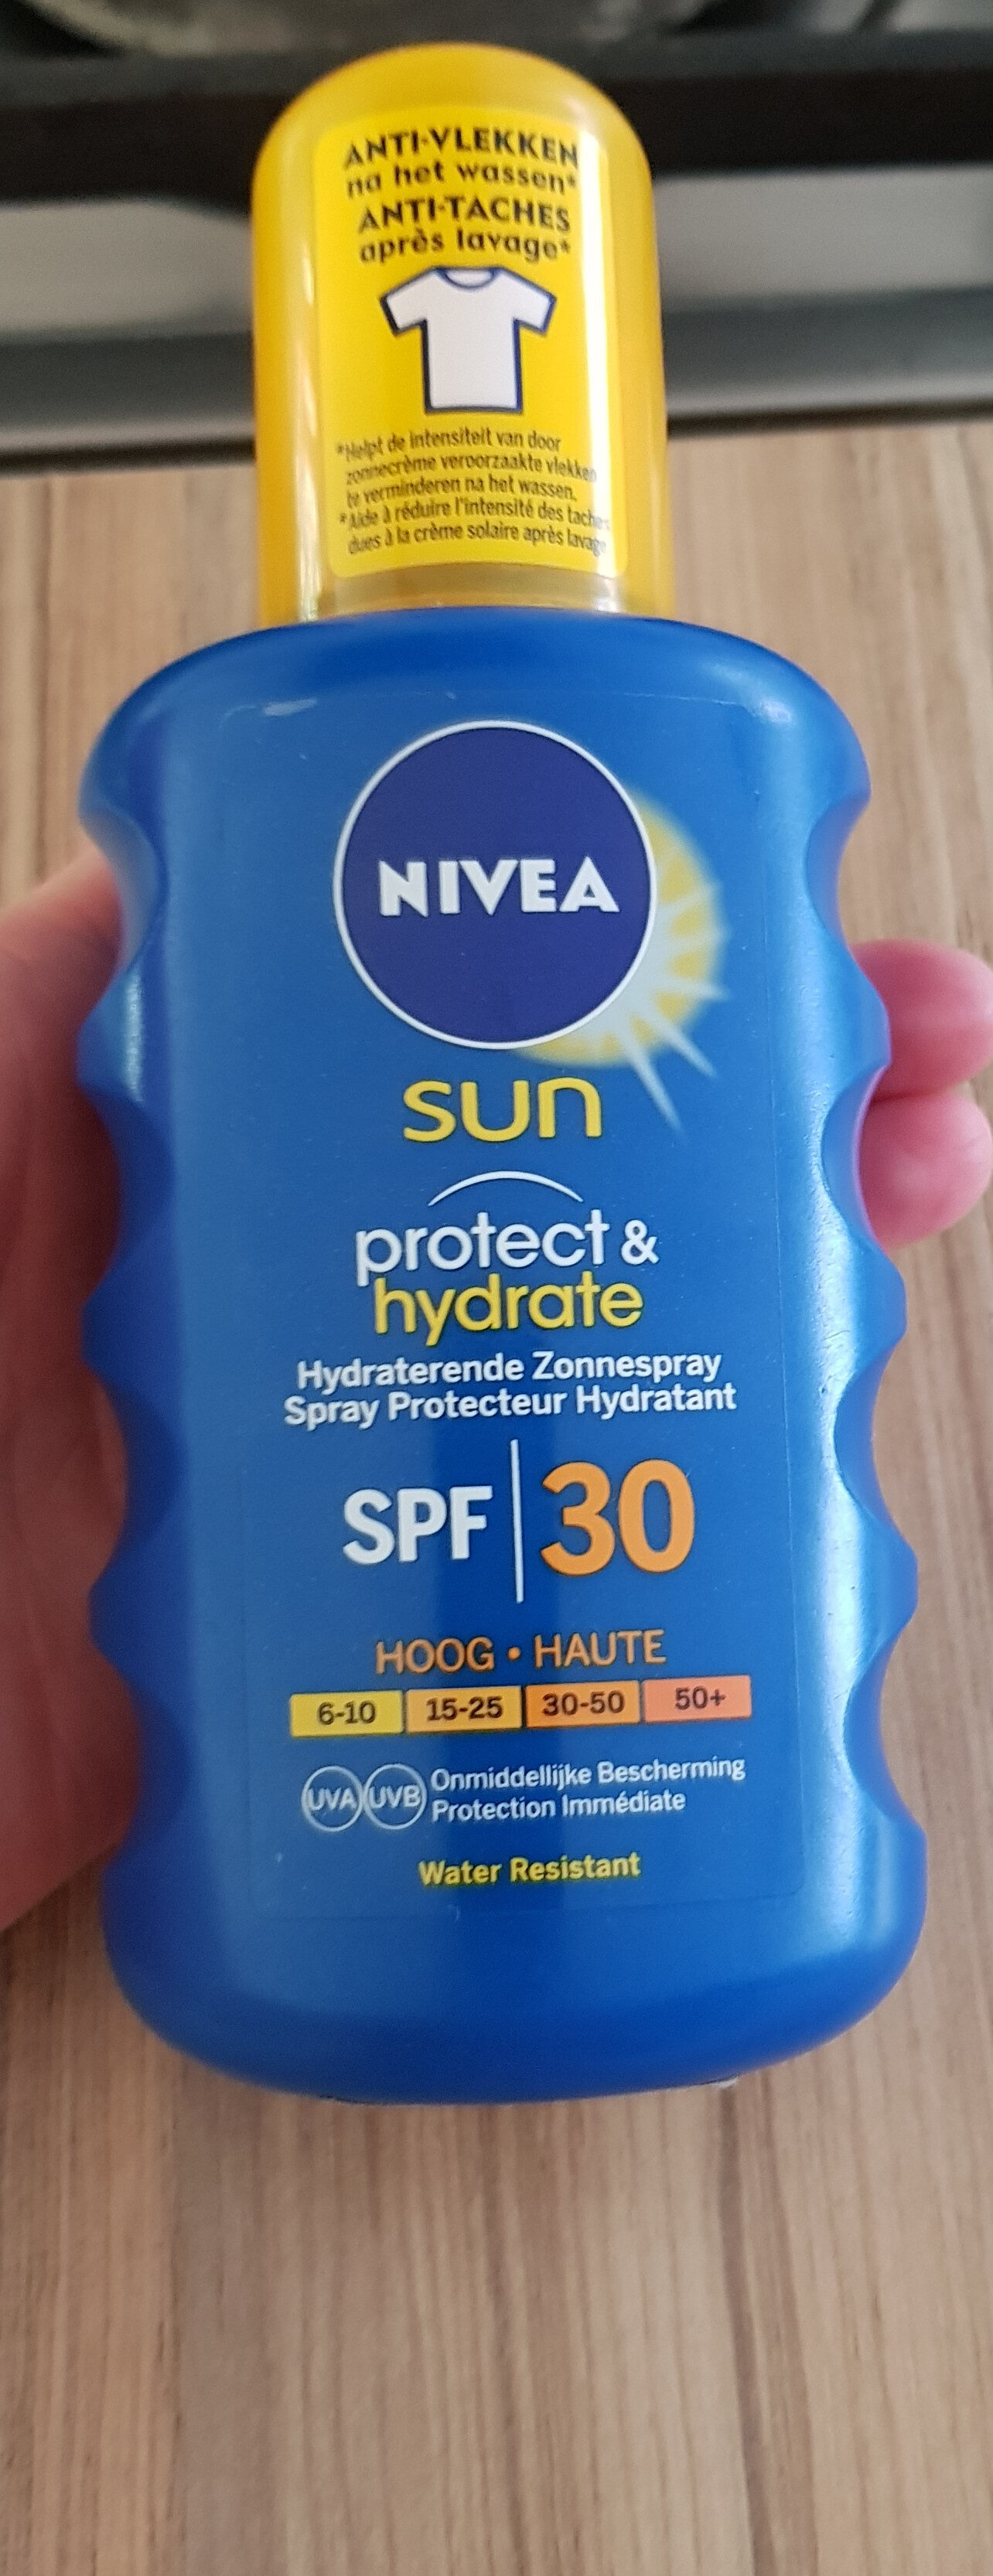 Sun Protect & Hydrate 30 - Produit - en